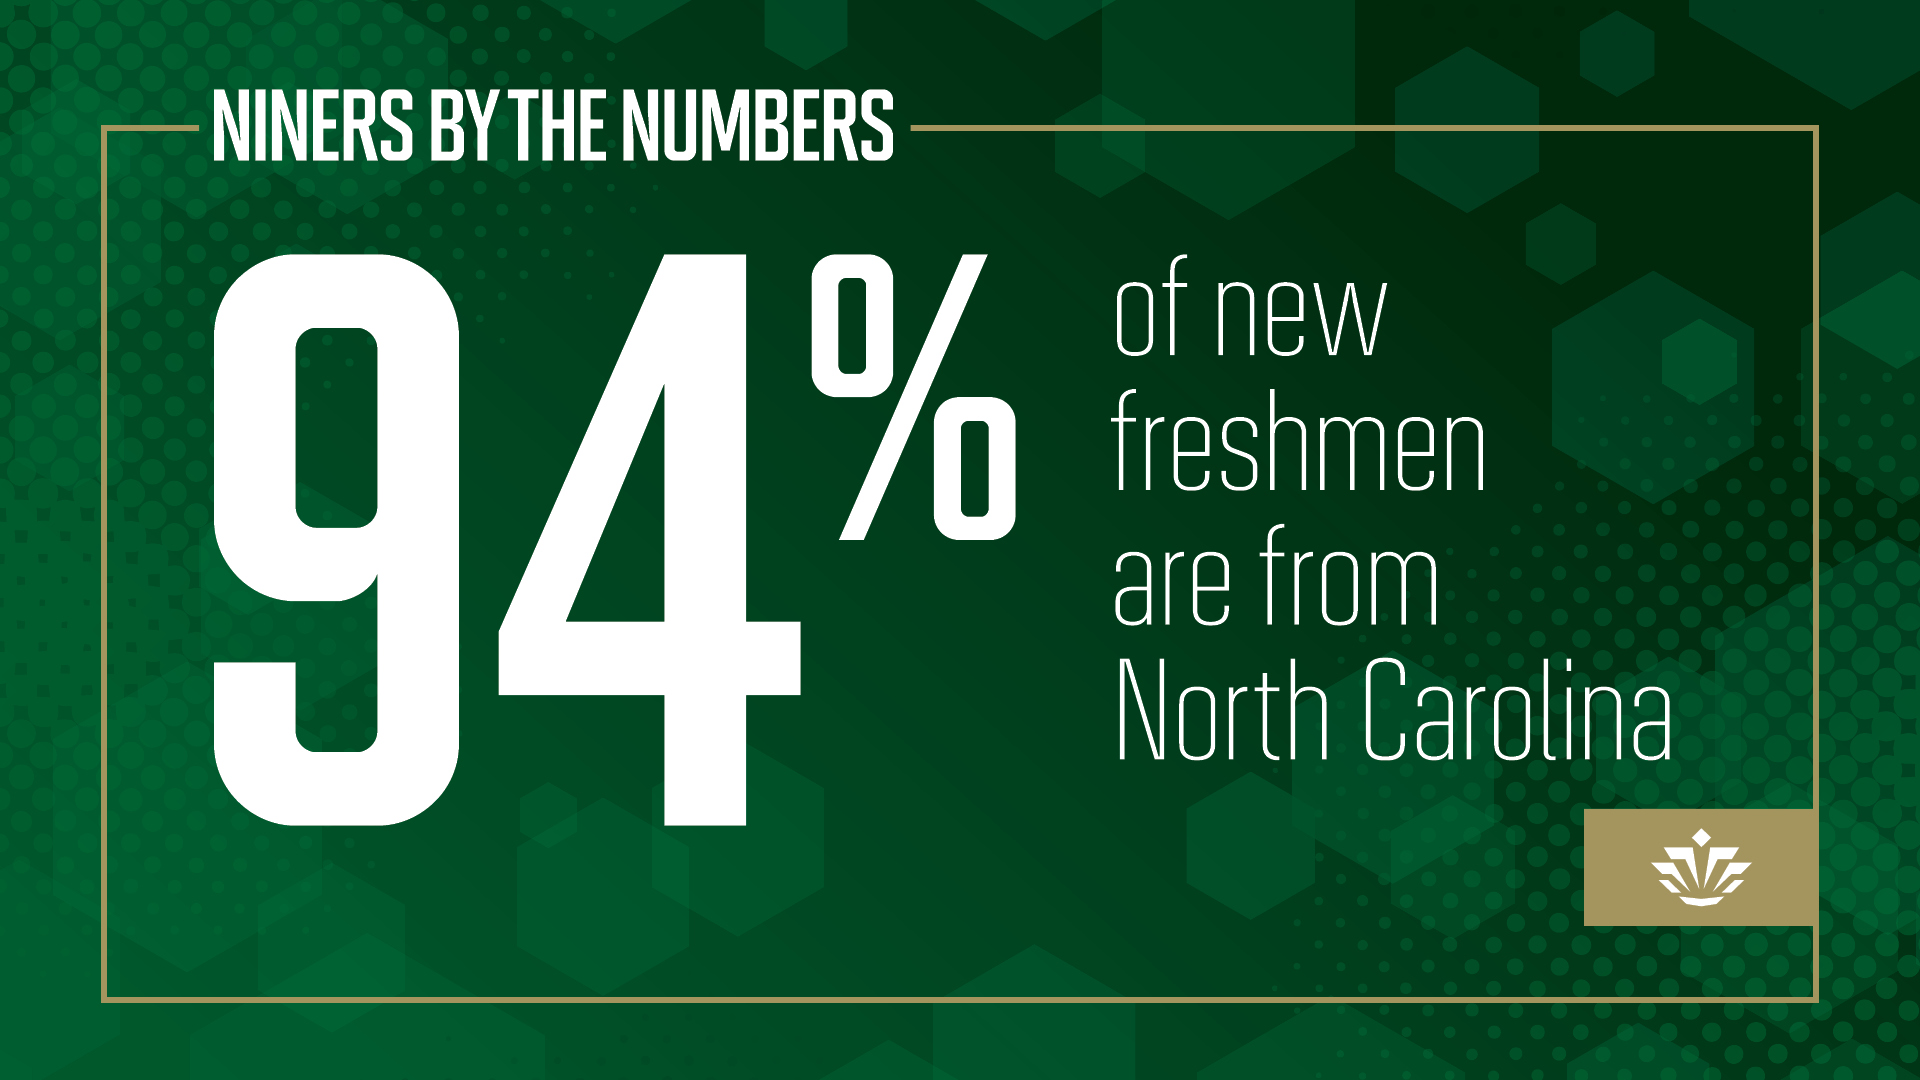 94% of new freshmen are from North Carolina